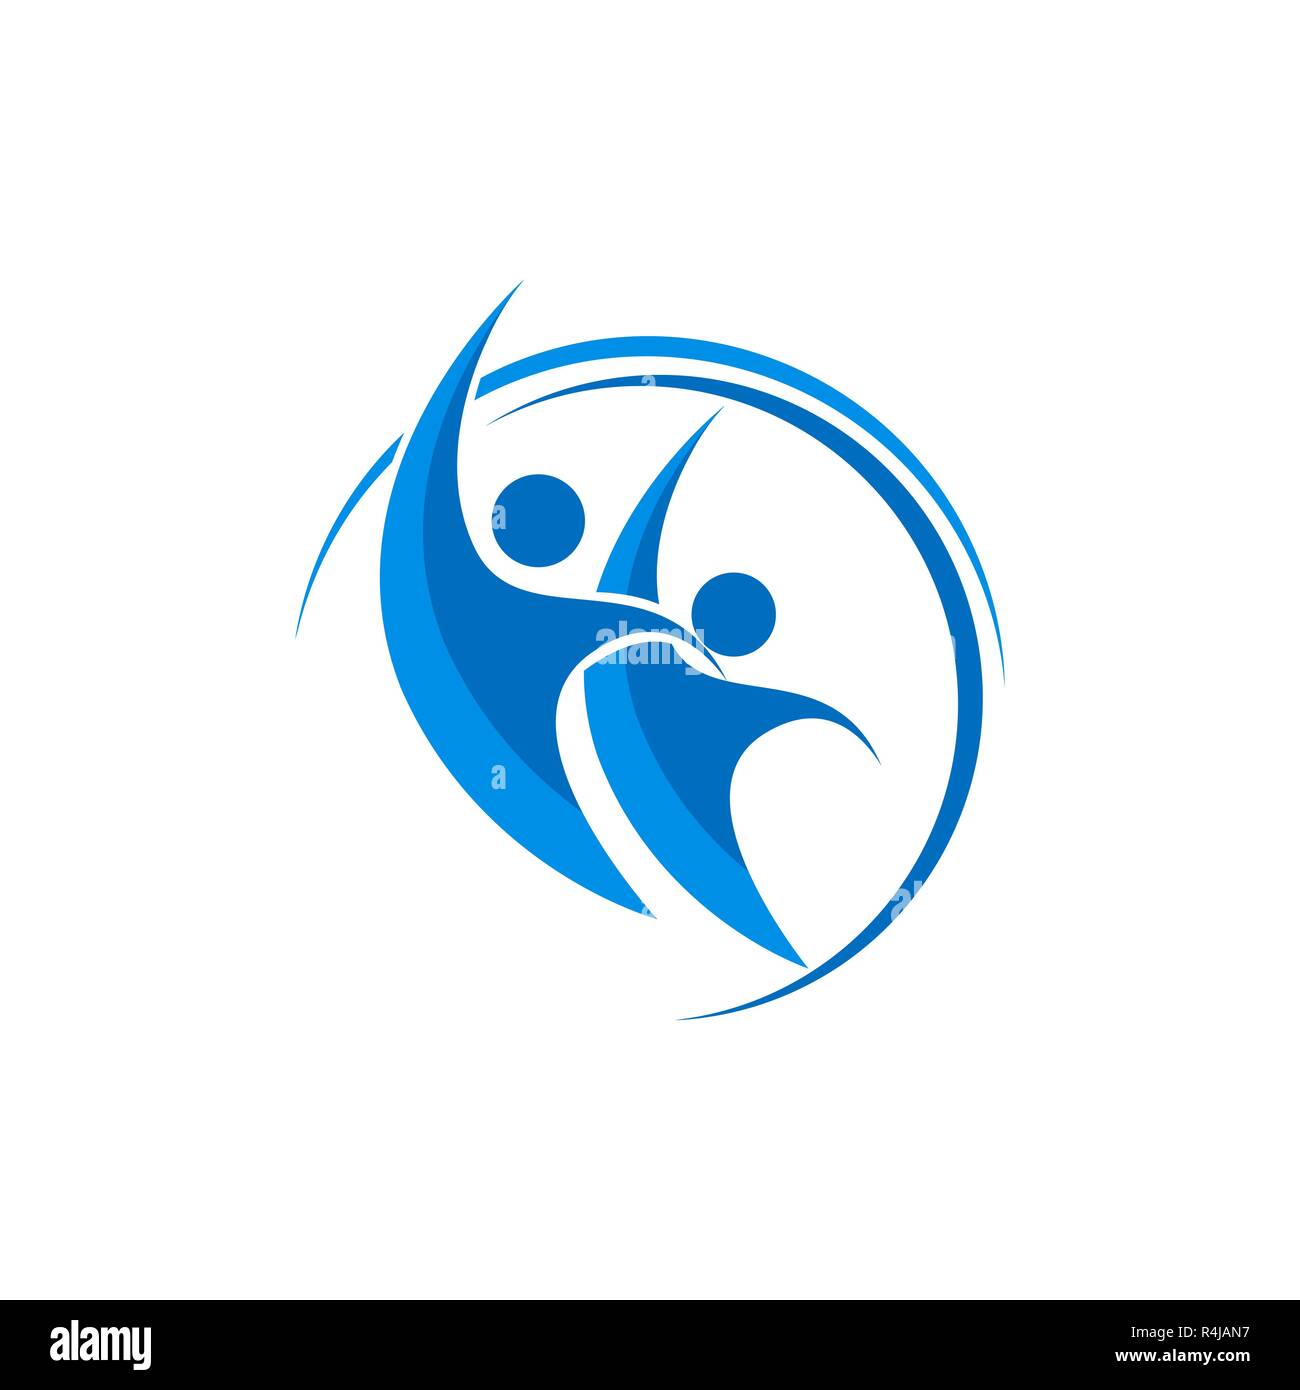 Social media - vector logo concept illustration. Human character logo. People logo Stock Vector